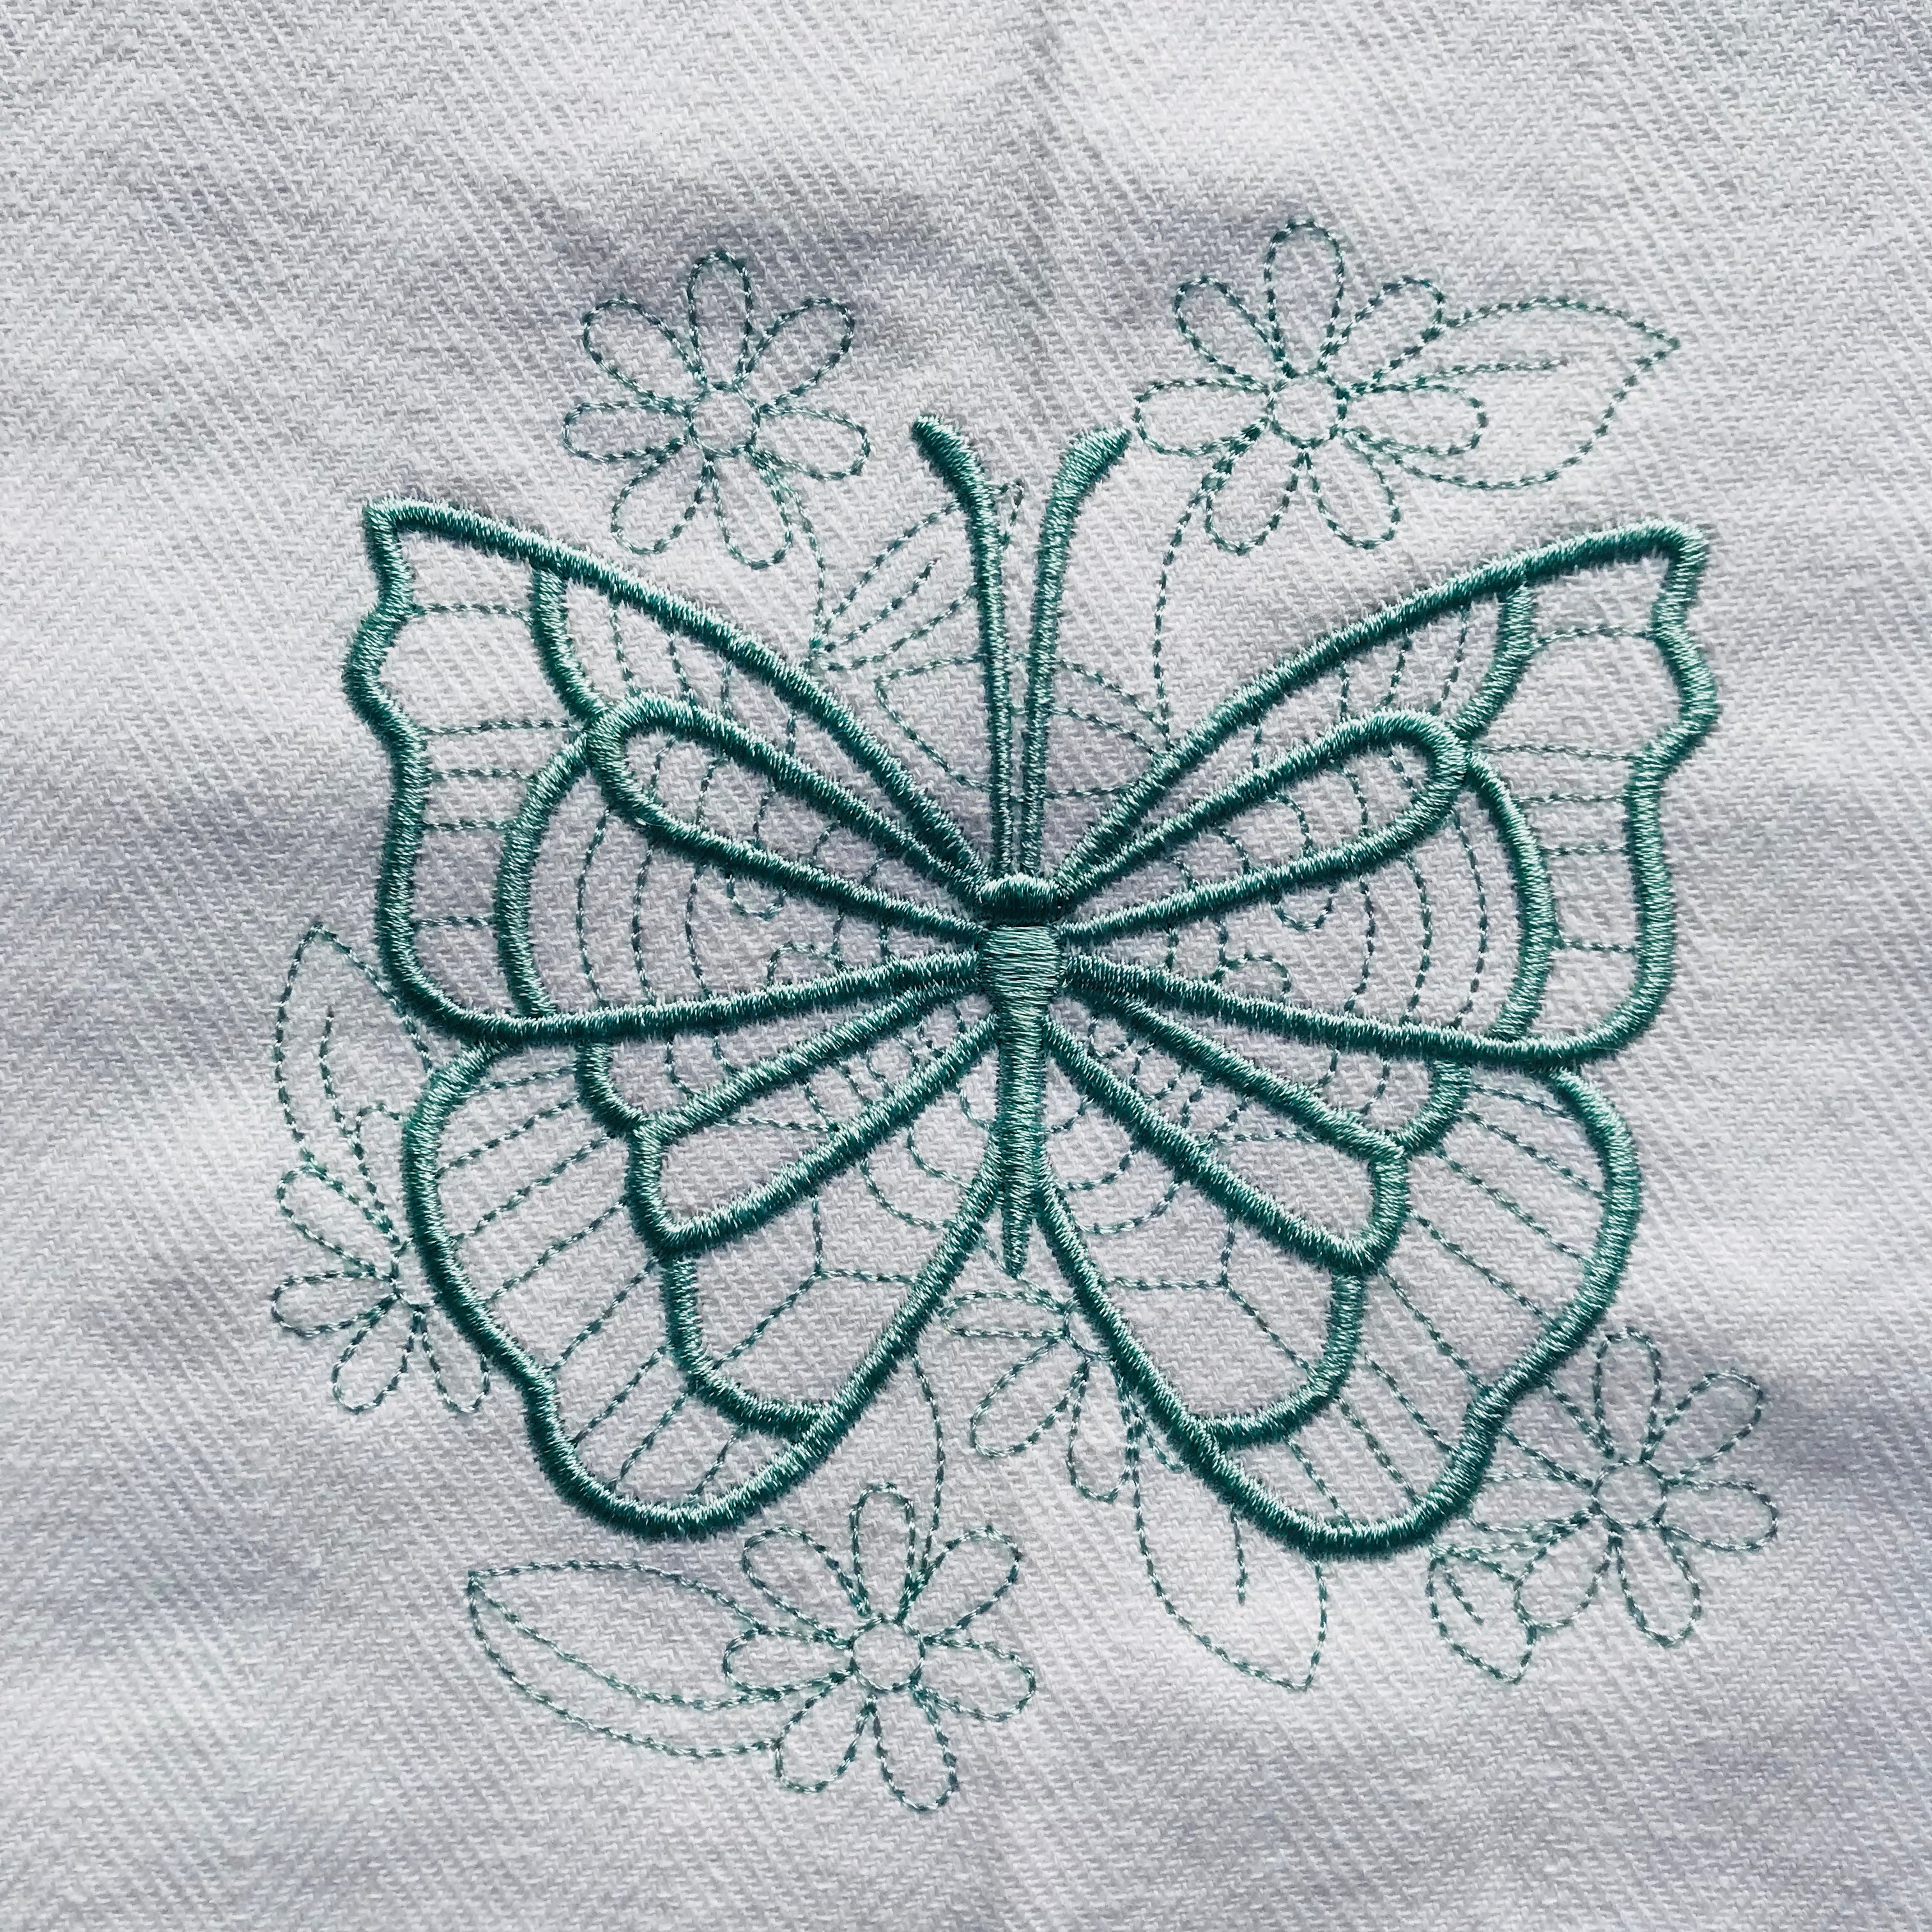 Aqua Butterflies Tea Towels Collection 🦋 - Alessandra Handmade Creations